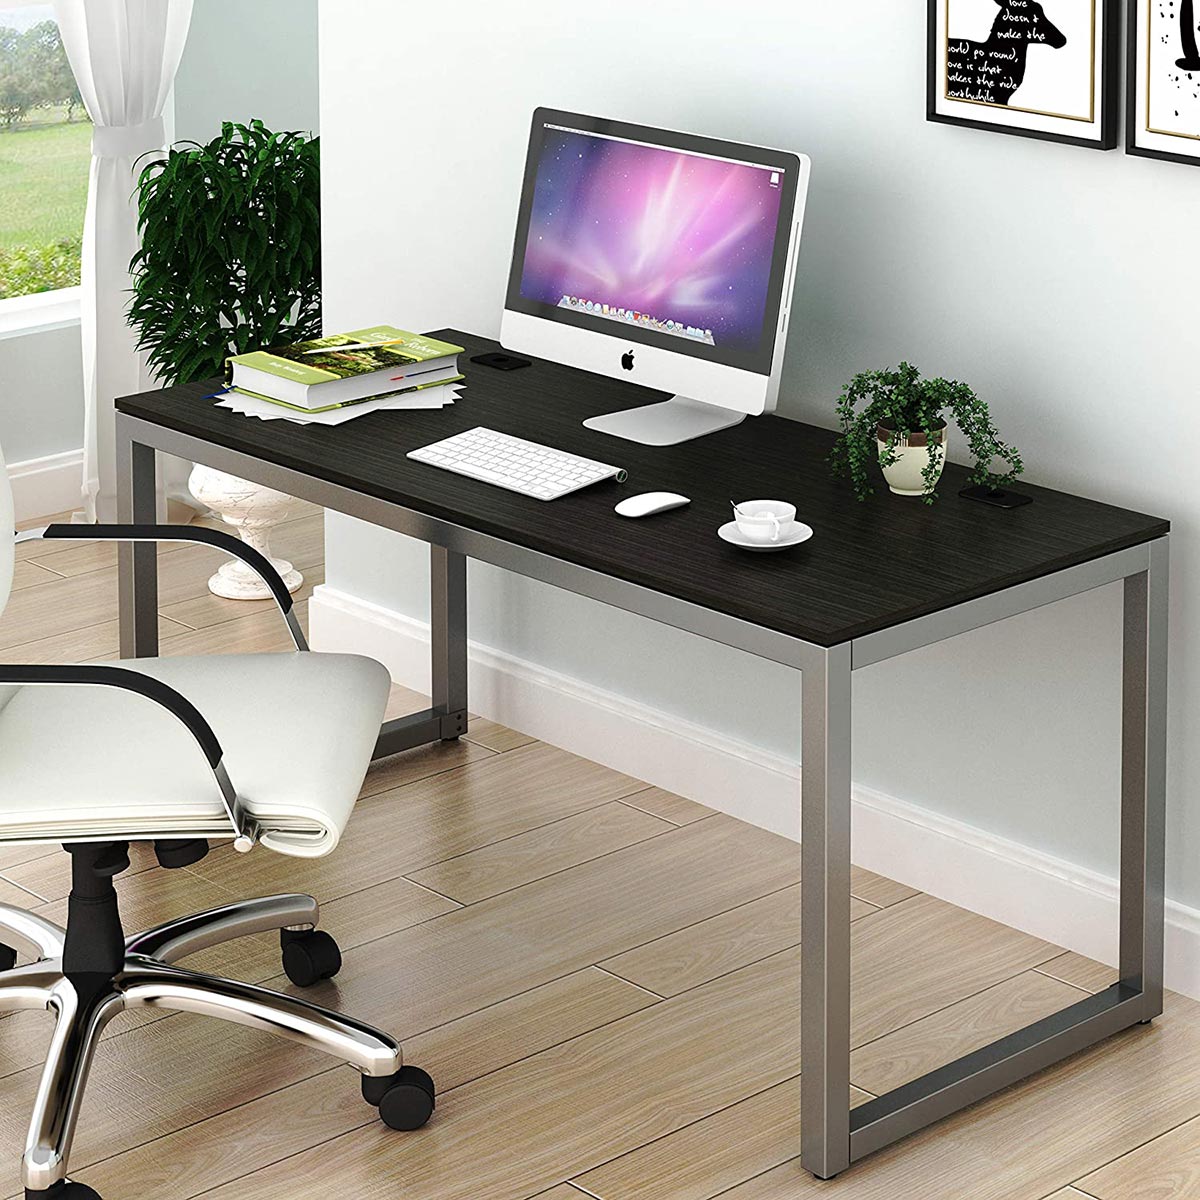 Minimalist Best Desk For Desktop Computer for Small Room